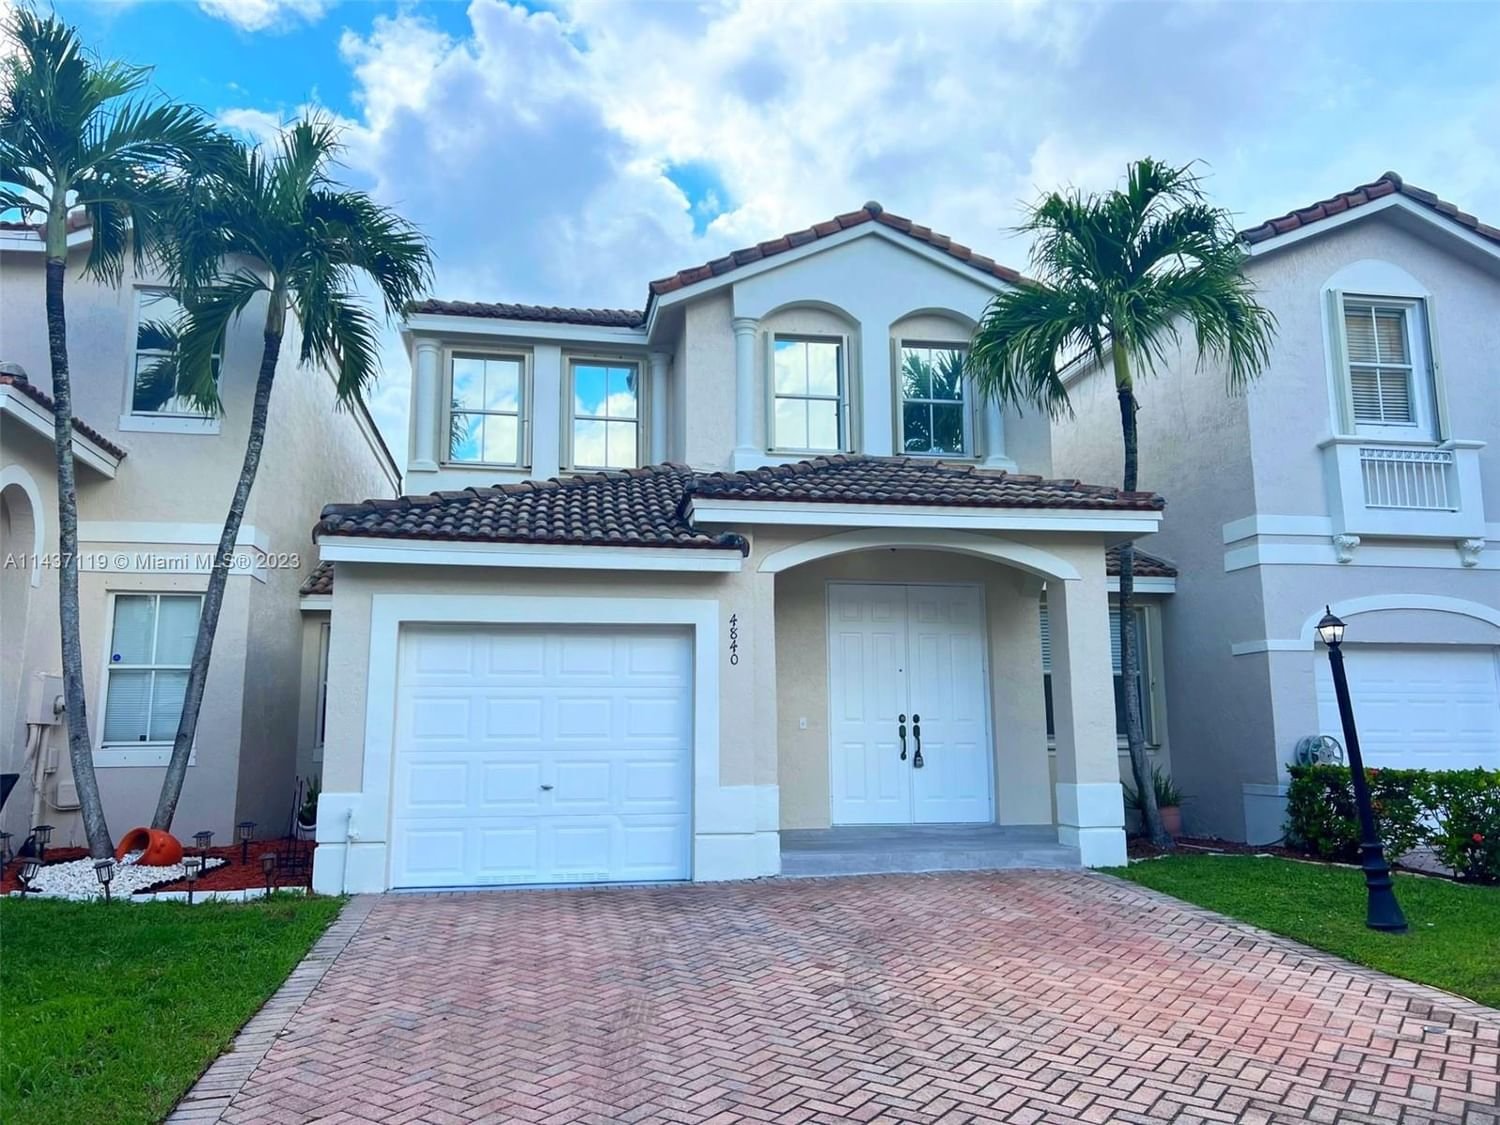 Real estate property located at 4840 108th Pl, Miami-Dade County, SAVANNAH AT DORAL, Doral, FL